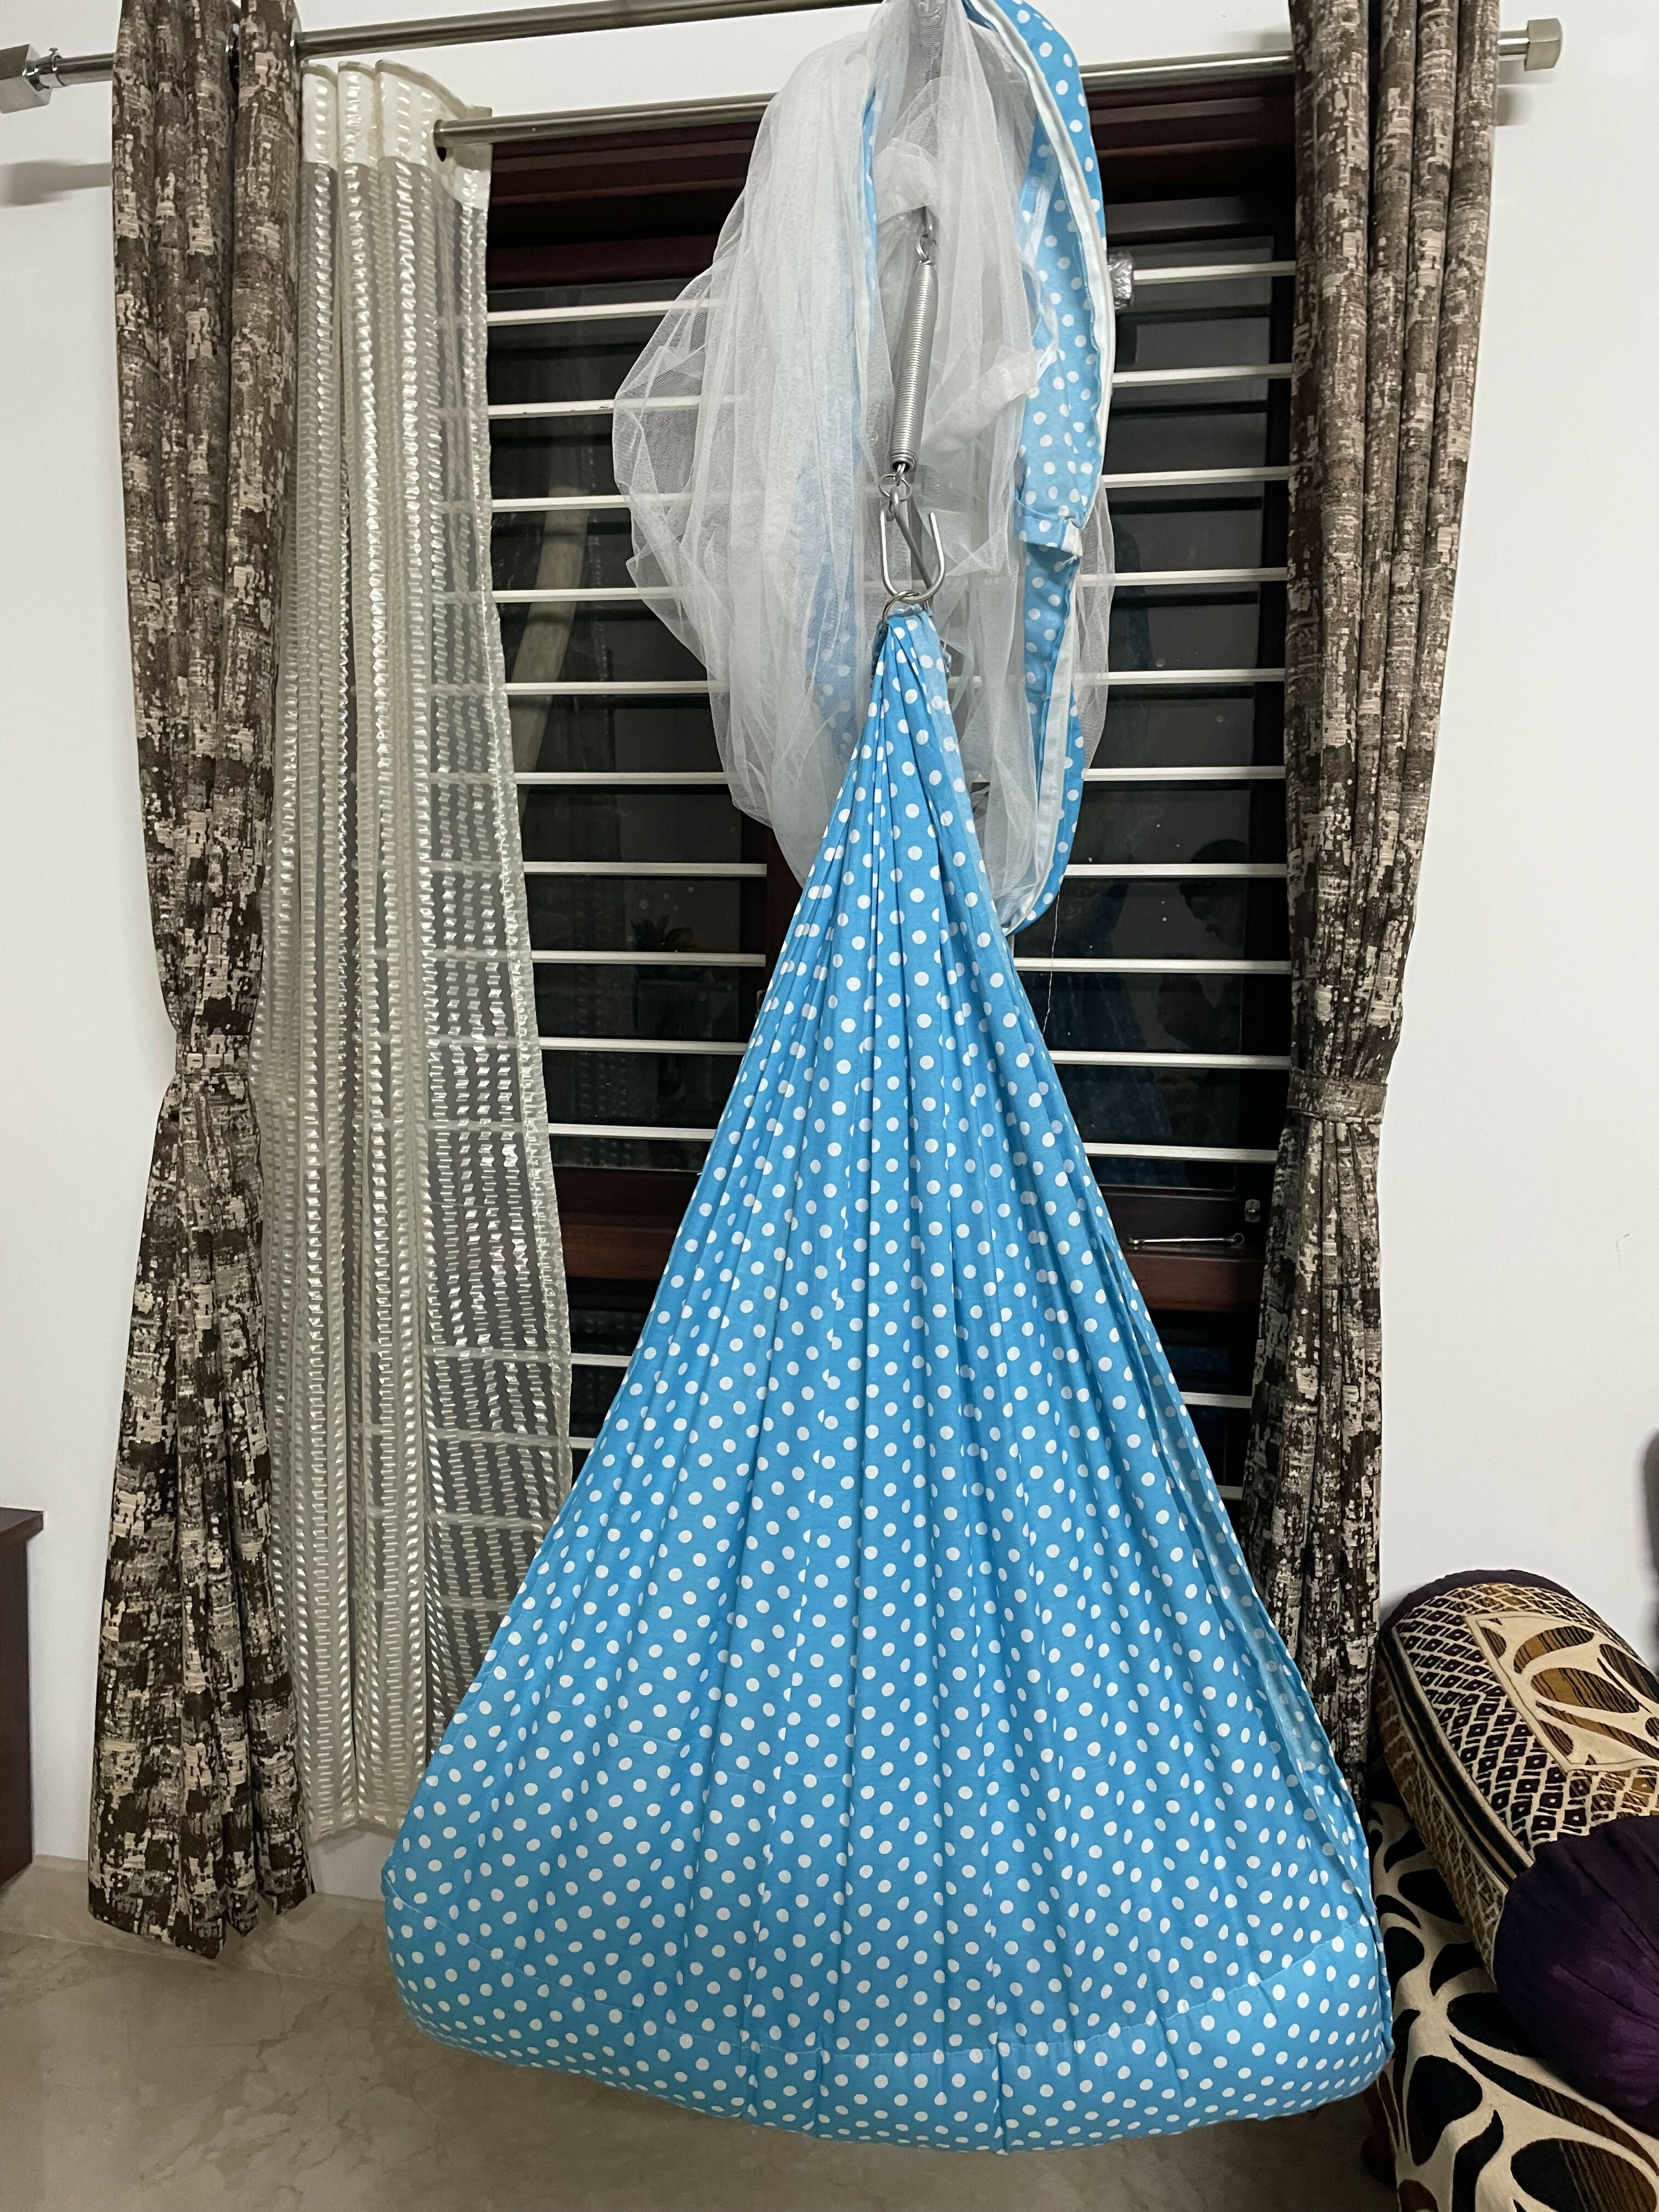 VPARENTS Toddler Baby Swing Cradle with Mosquito Net Spring and Metal Window Cradle Hanger (Blue) - PyaraBaby